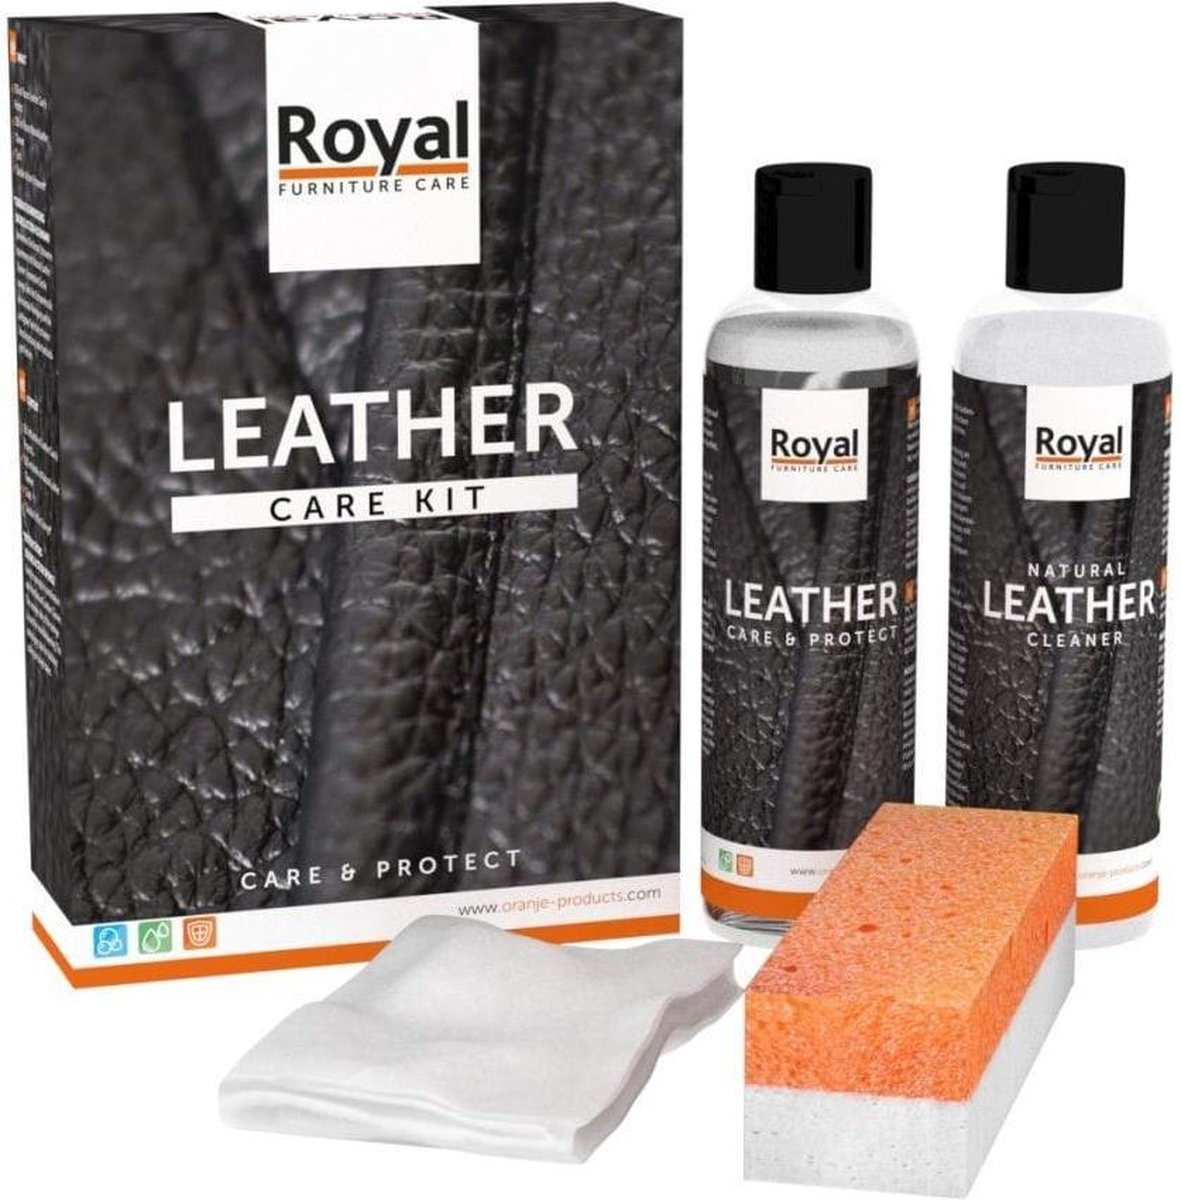 Royal furniture care - Leather Care Kit - Care & Protect - 2 x 75ml - royal furniture care